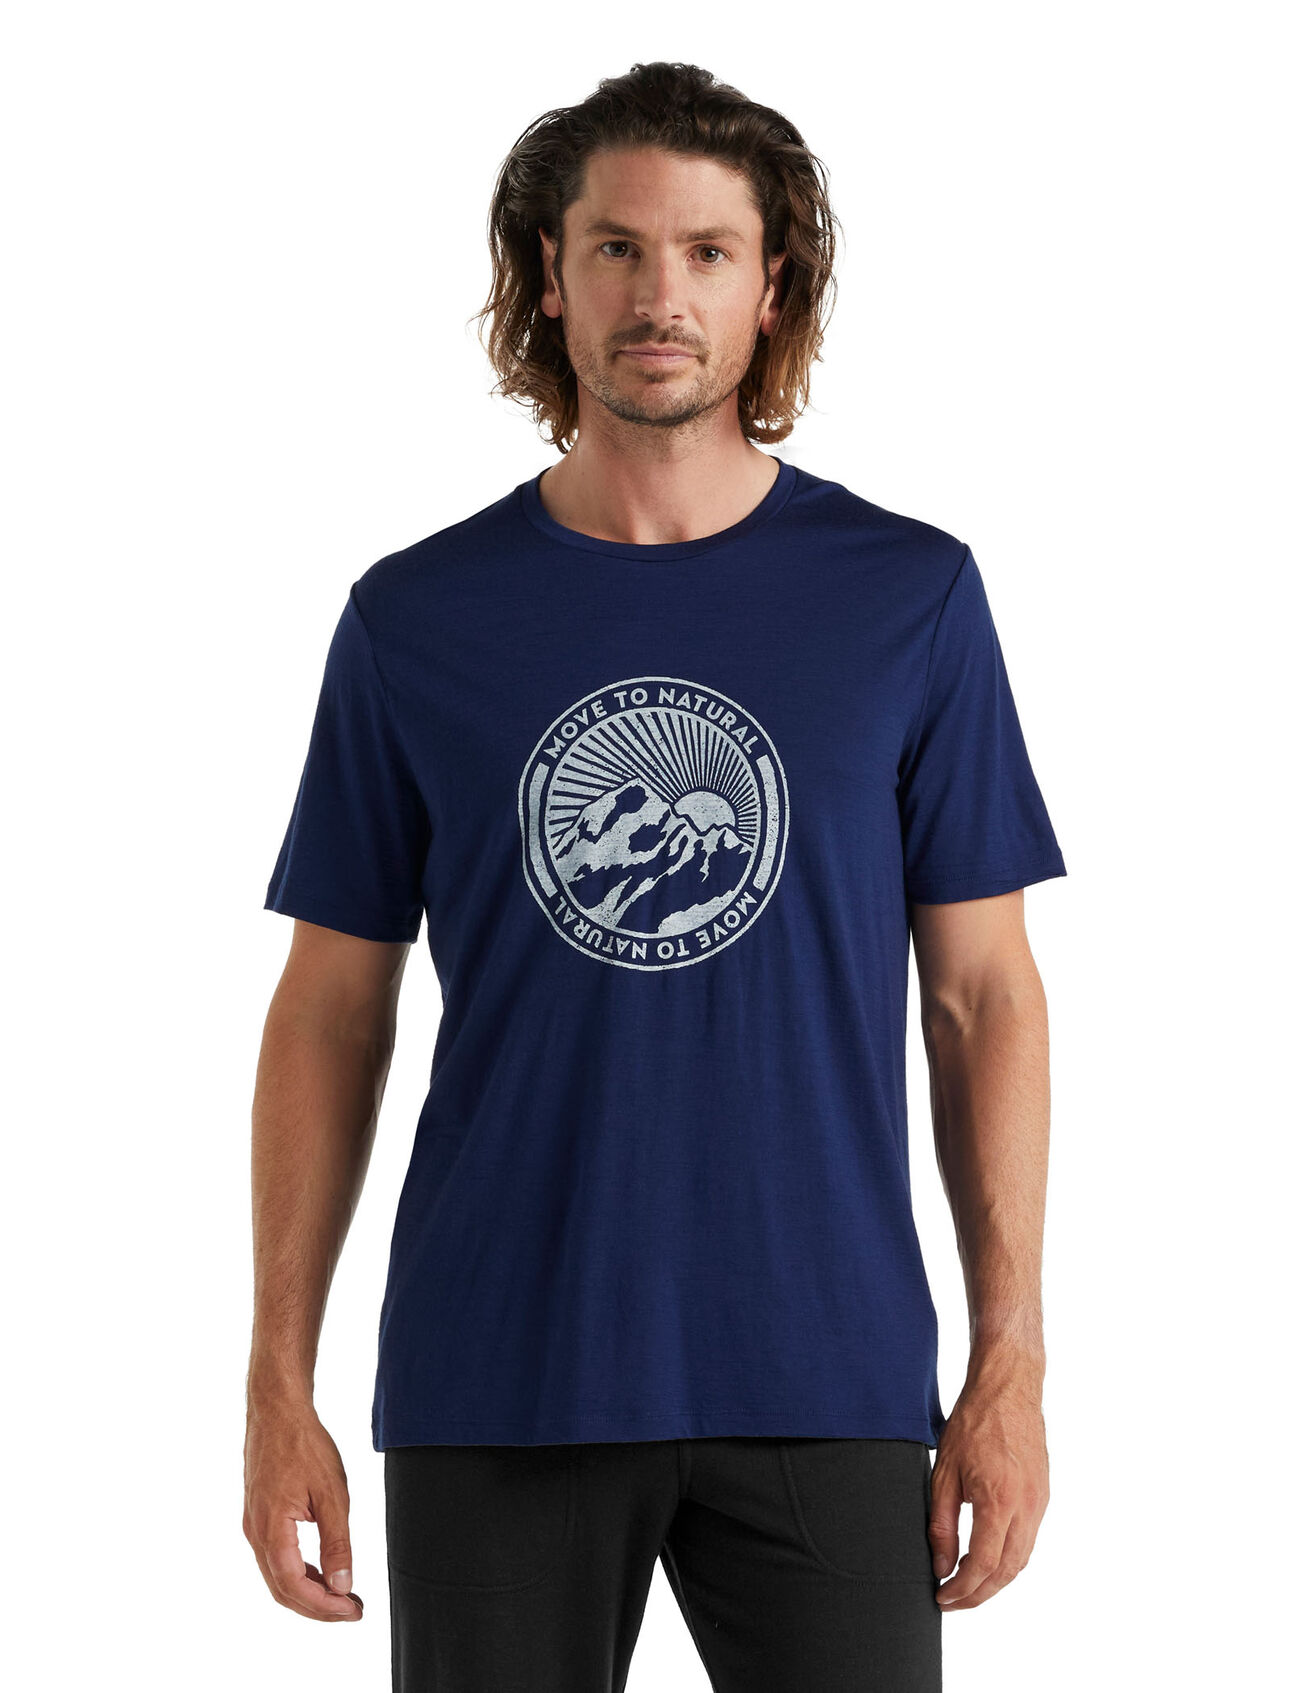 Merino Tech Lite II T-Shirt Move to Natural Mountain